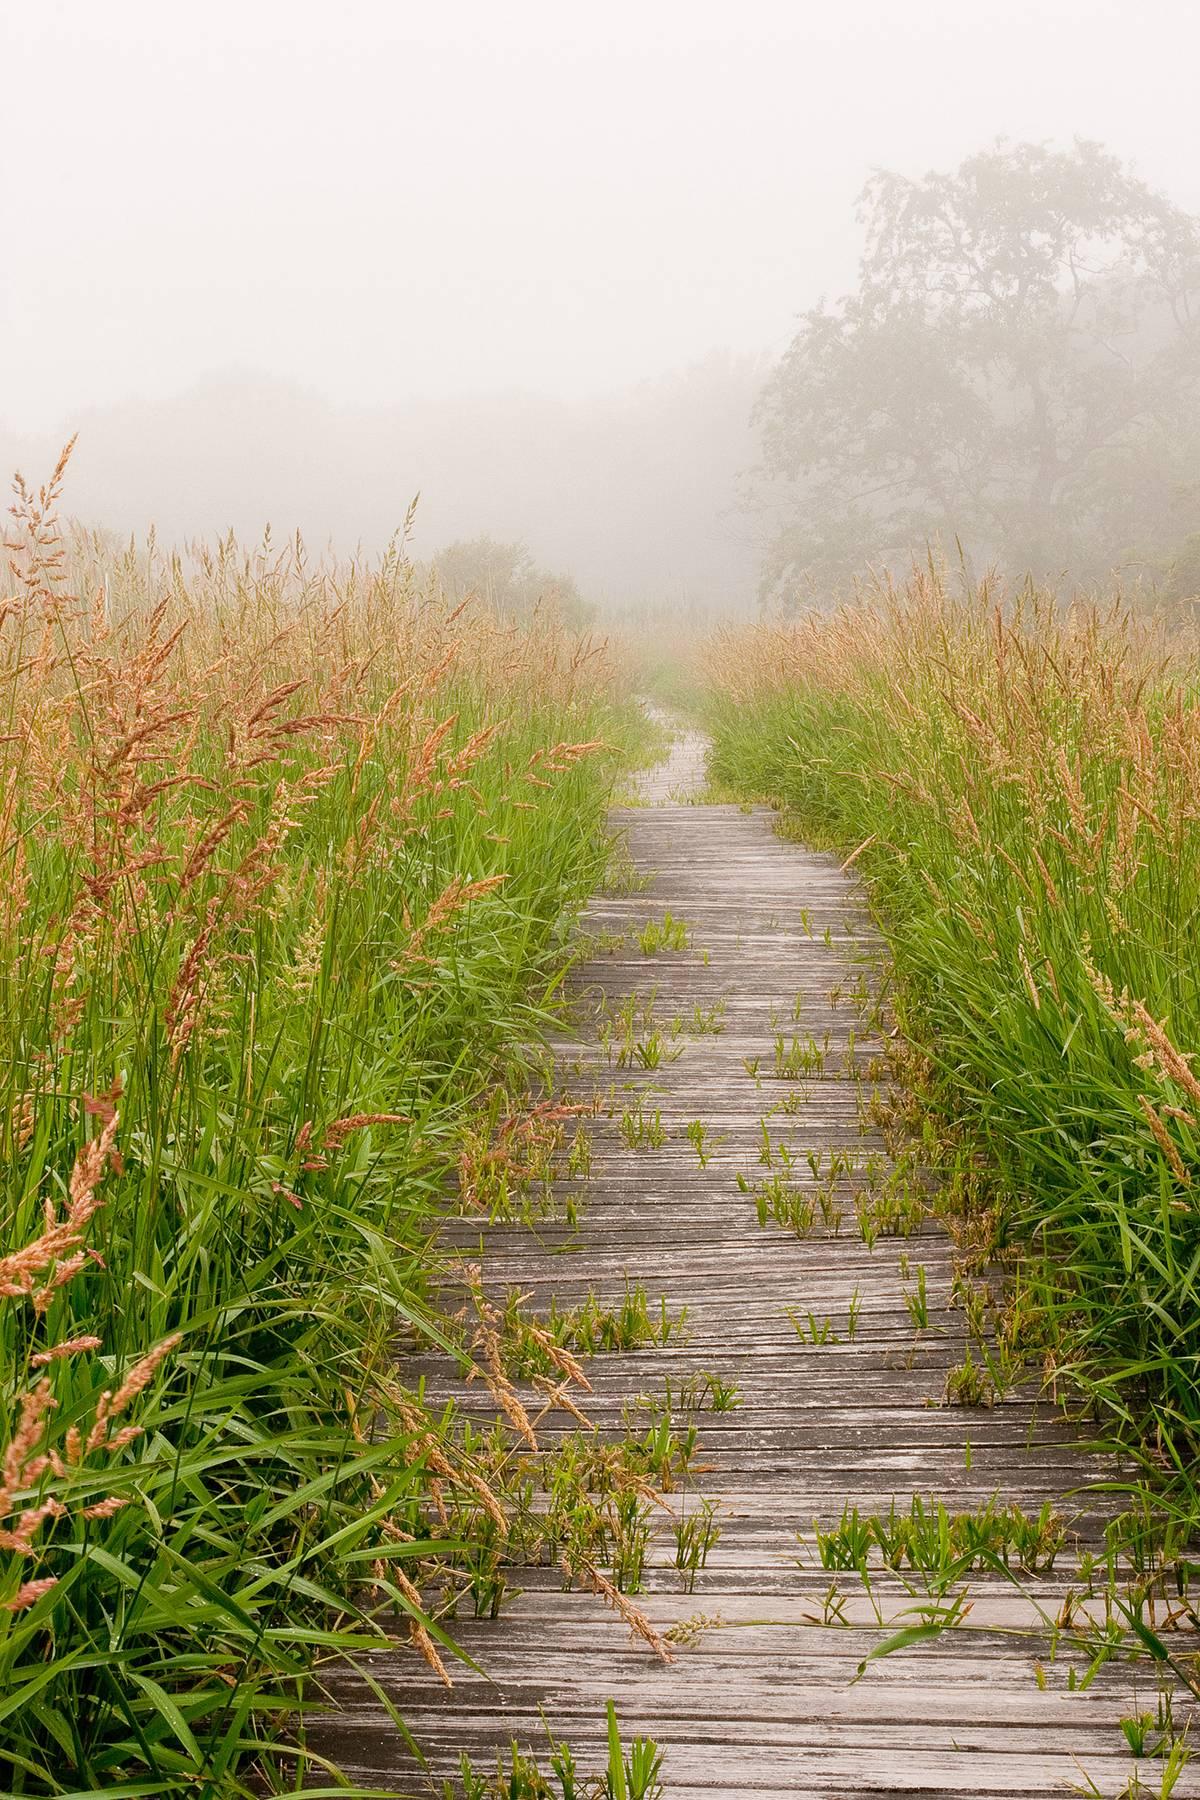 Rebecca Skinner Color Photograph - "Walk This Way", color photograph, landscape, boardwalk, foggy, sea grass, green